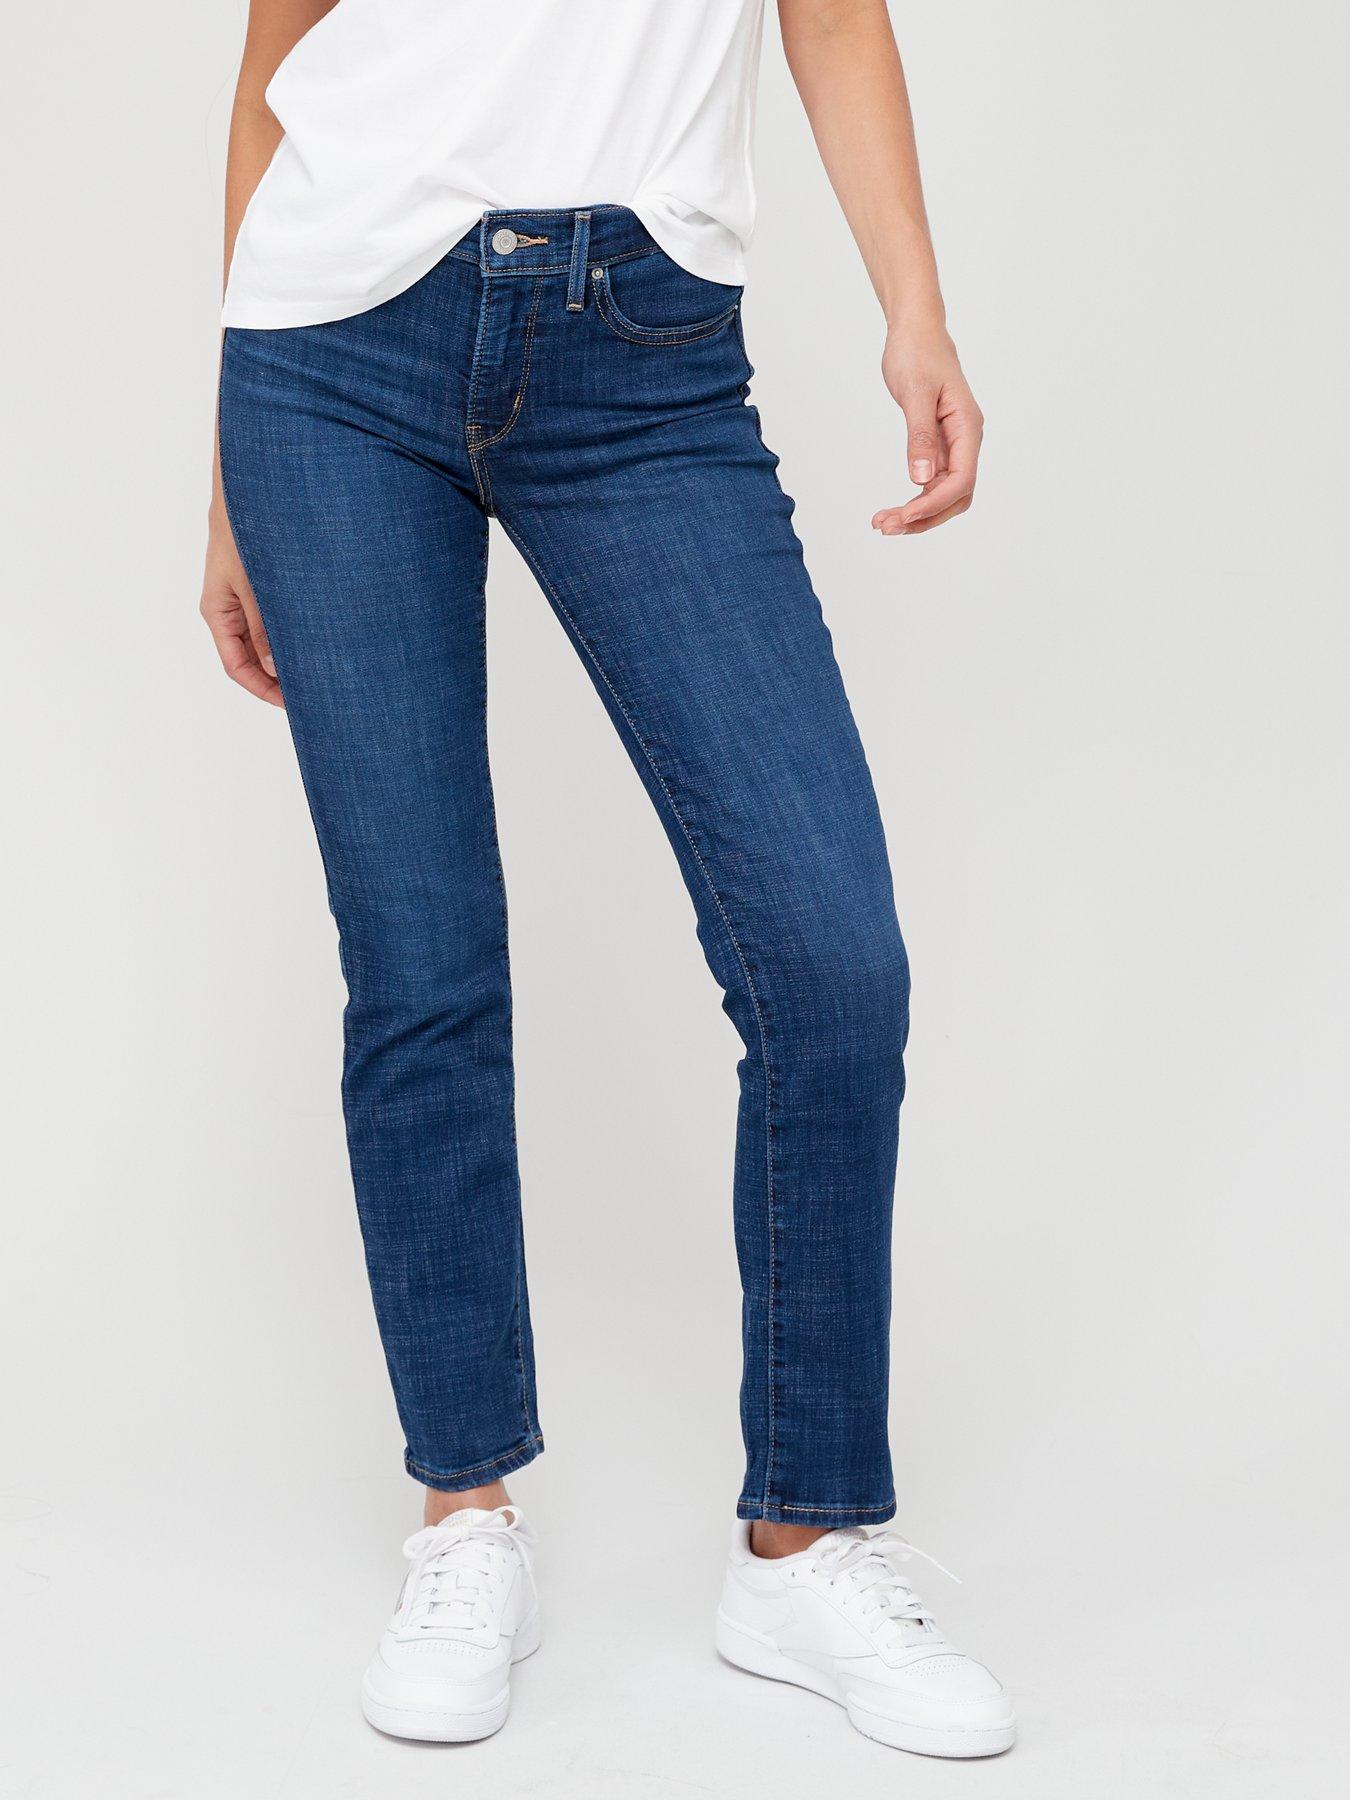  Levis Womens Plus-Size 414 Classic Straight Jeans, Lapis  Dark Horse, 37